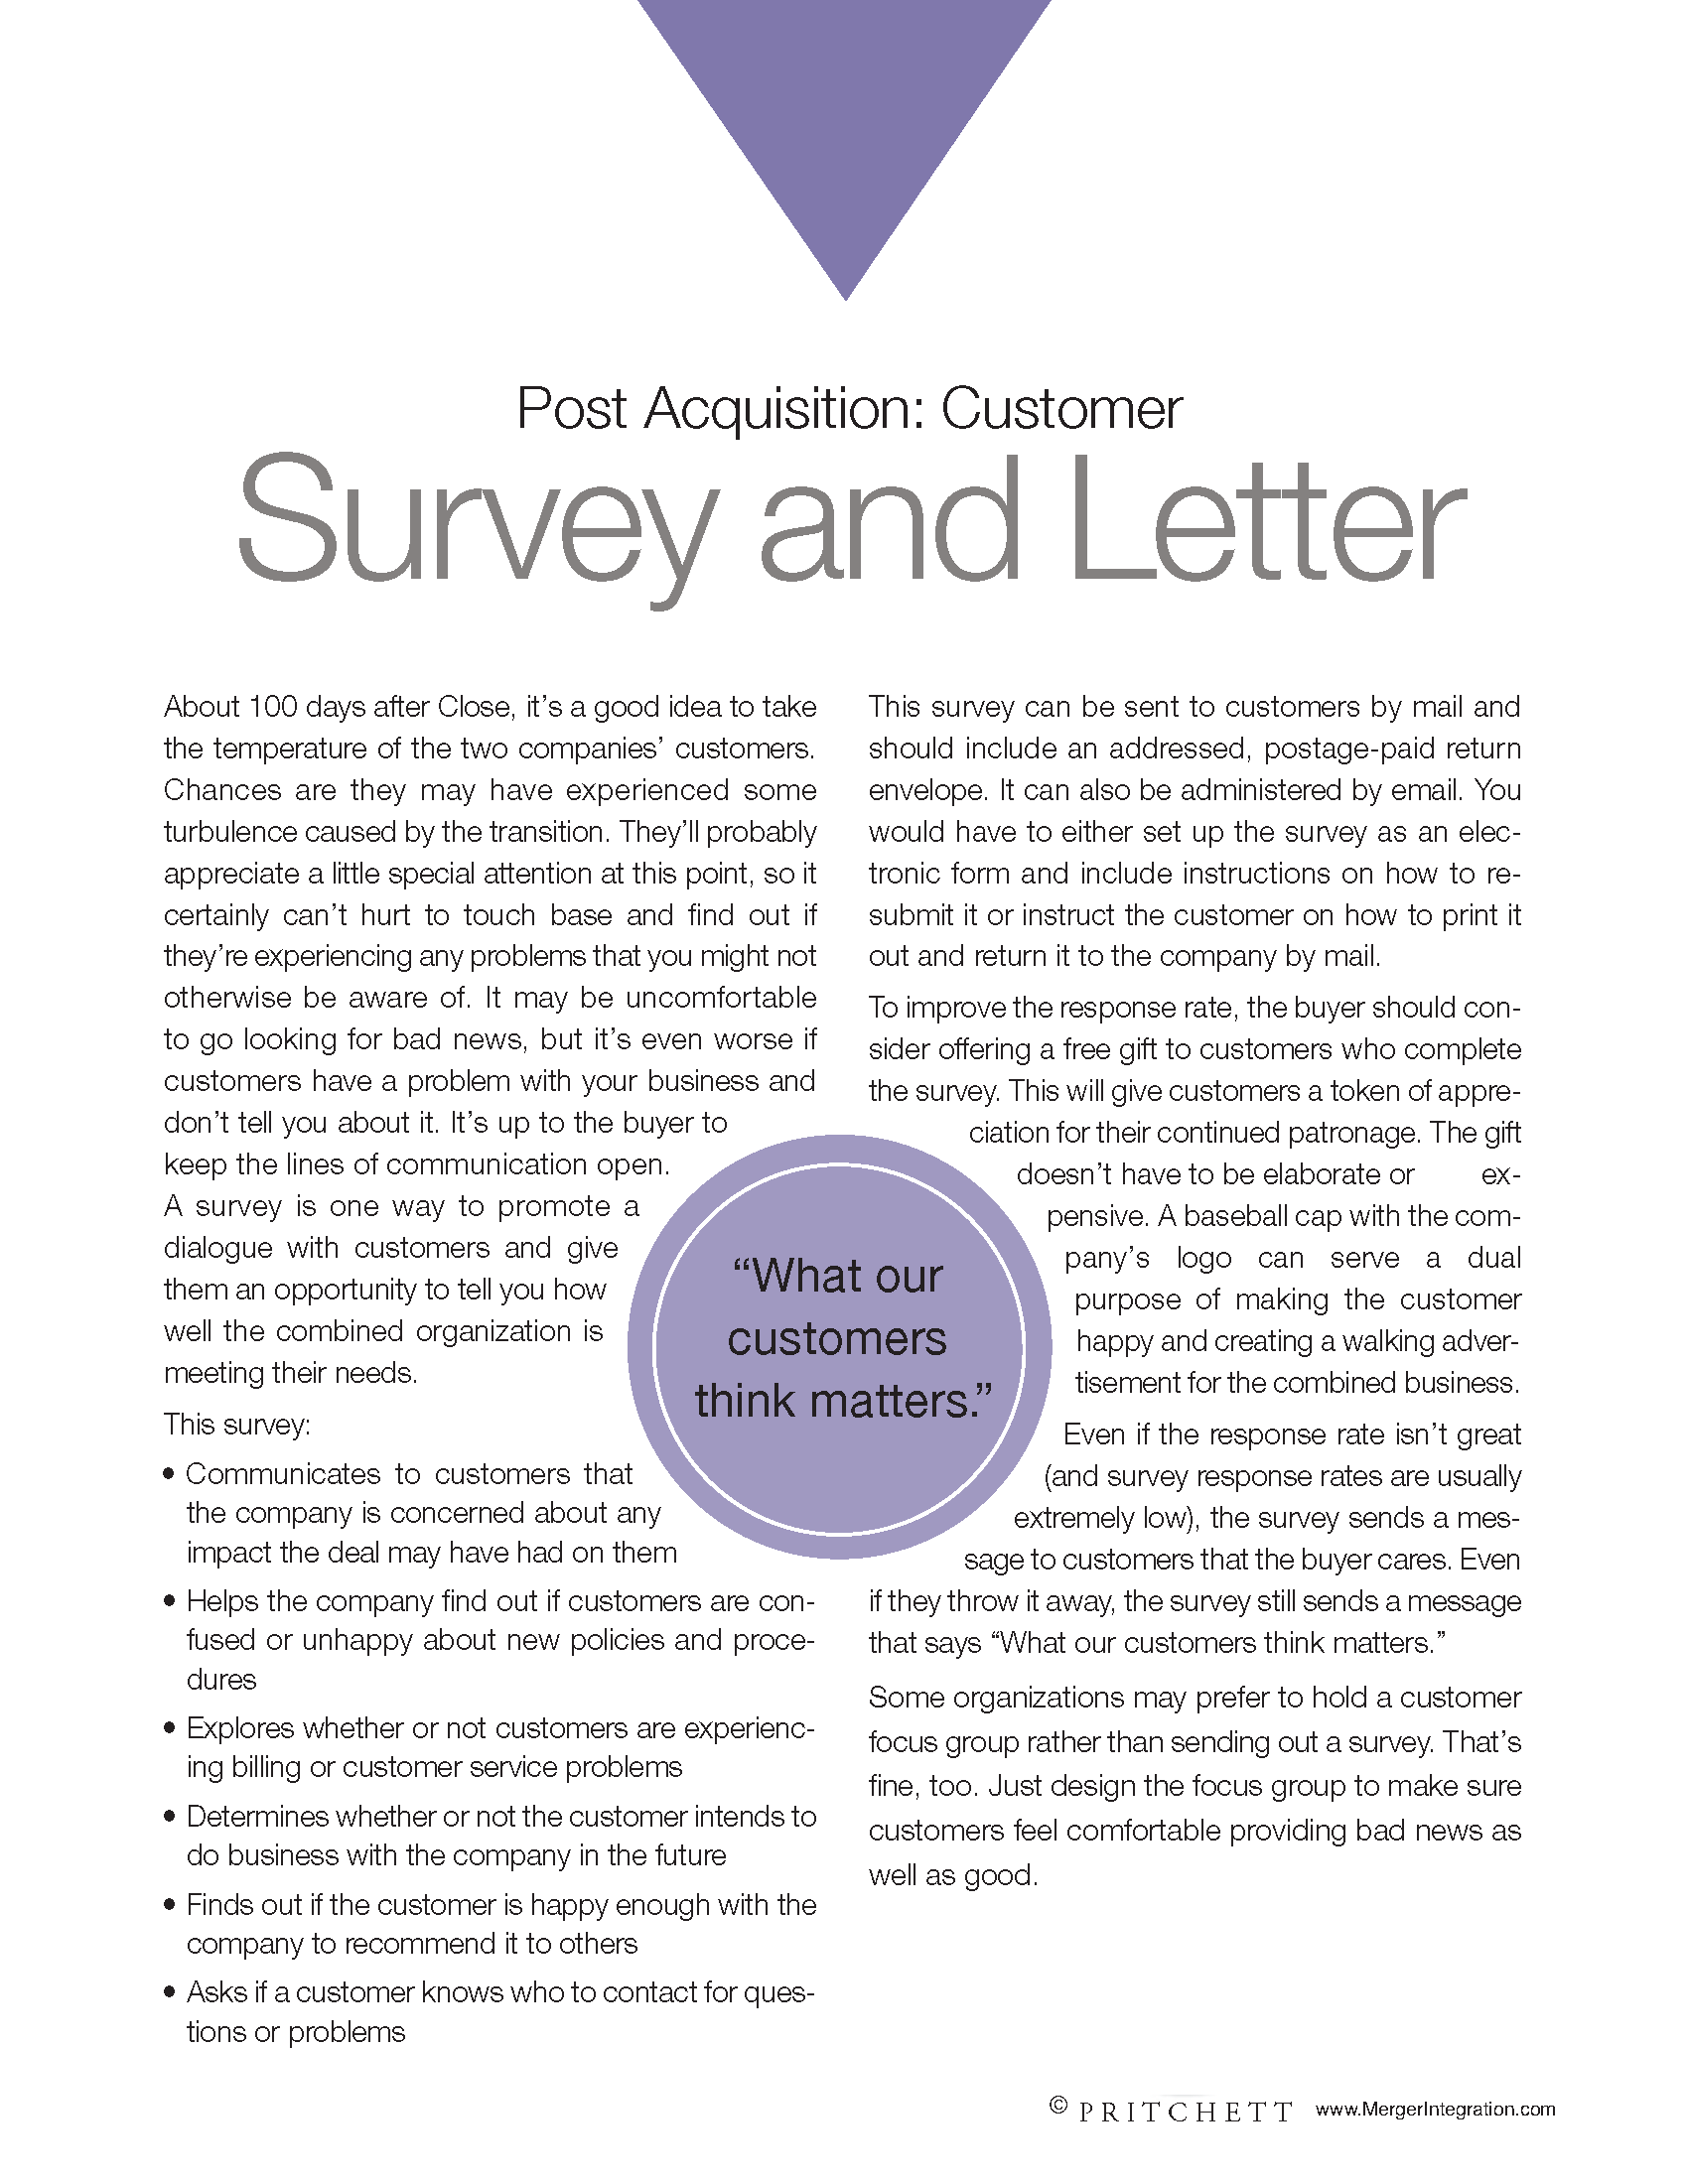 Post Acquisition Customer Survey